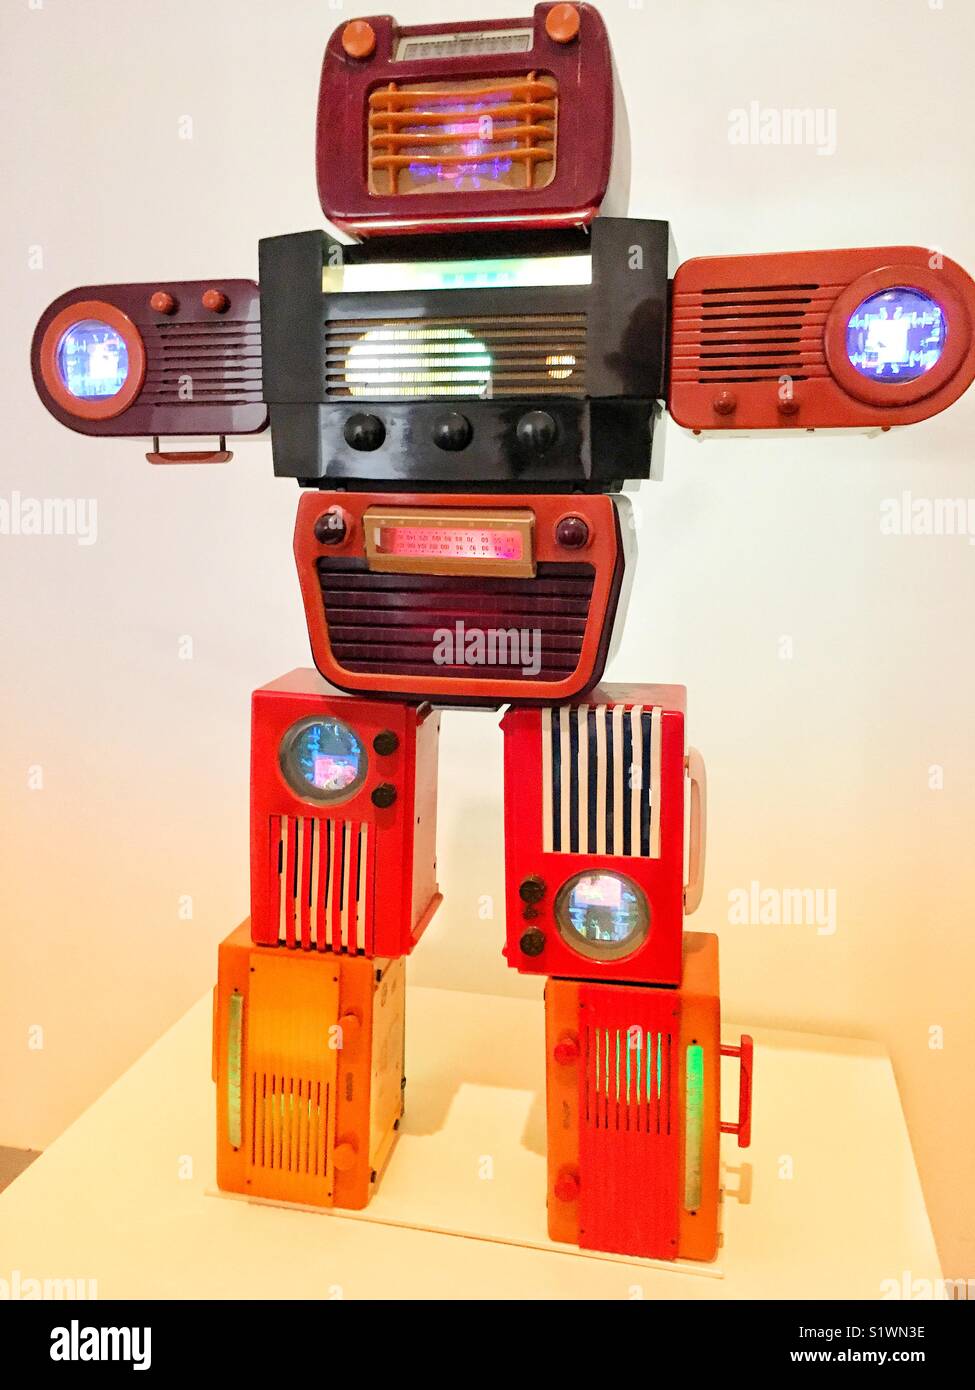 Classical robot made of vintage transistor radios Stock Photo - Alamy